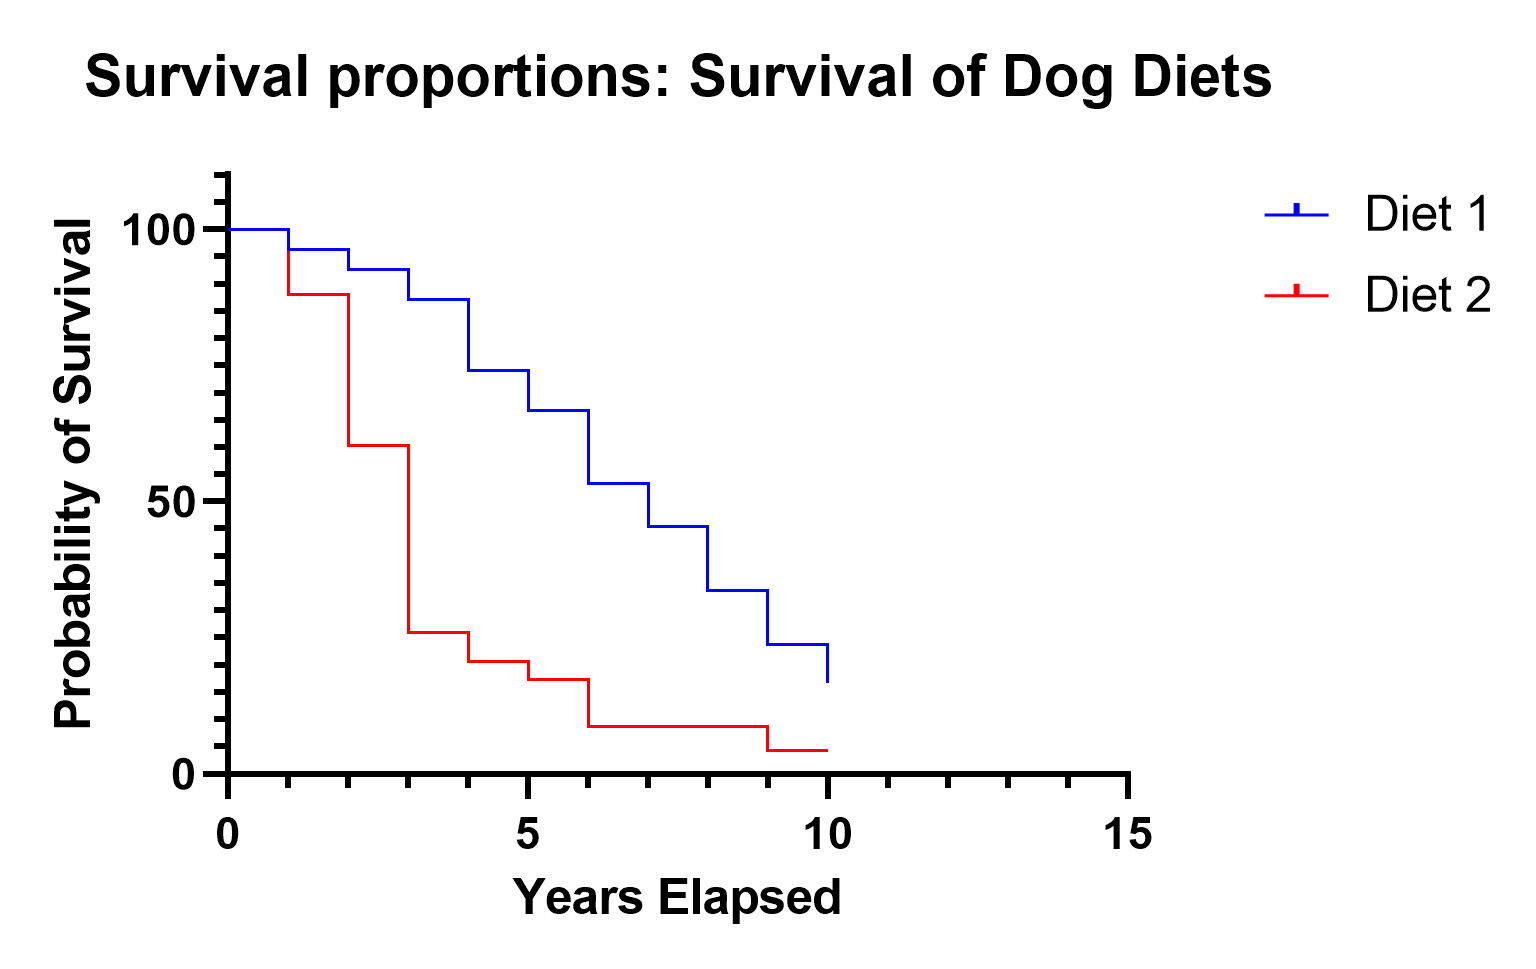 Survival proportions: Survival of Dog Diets